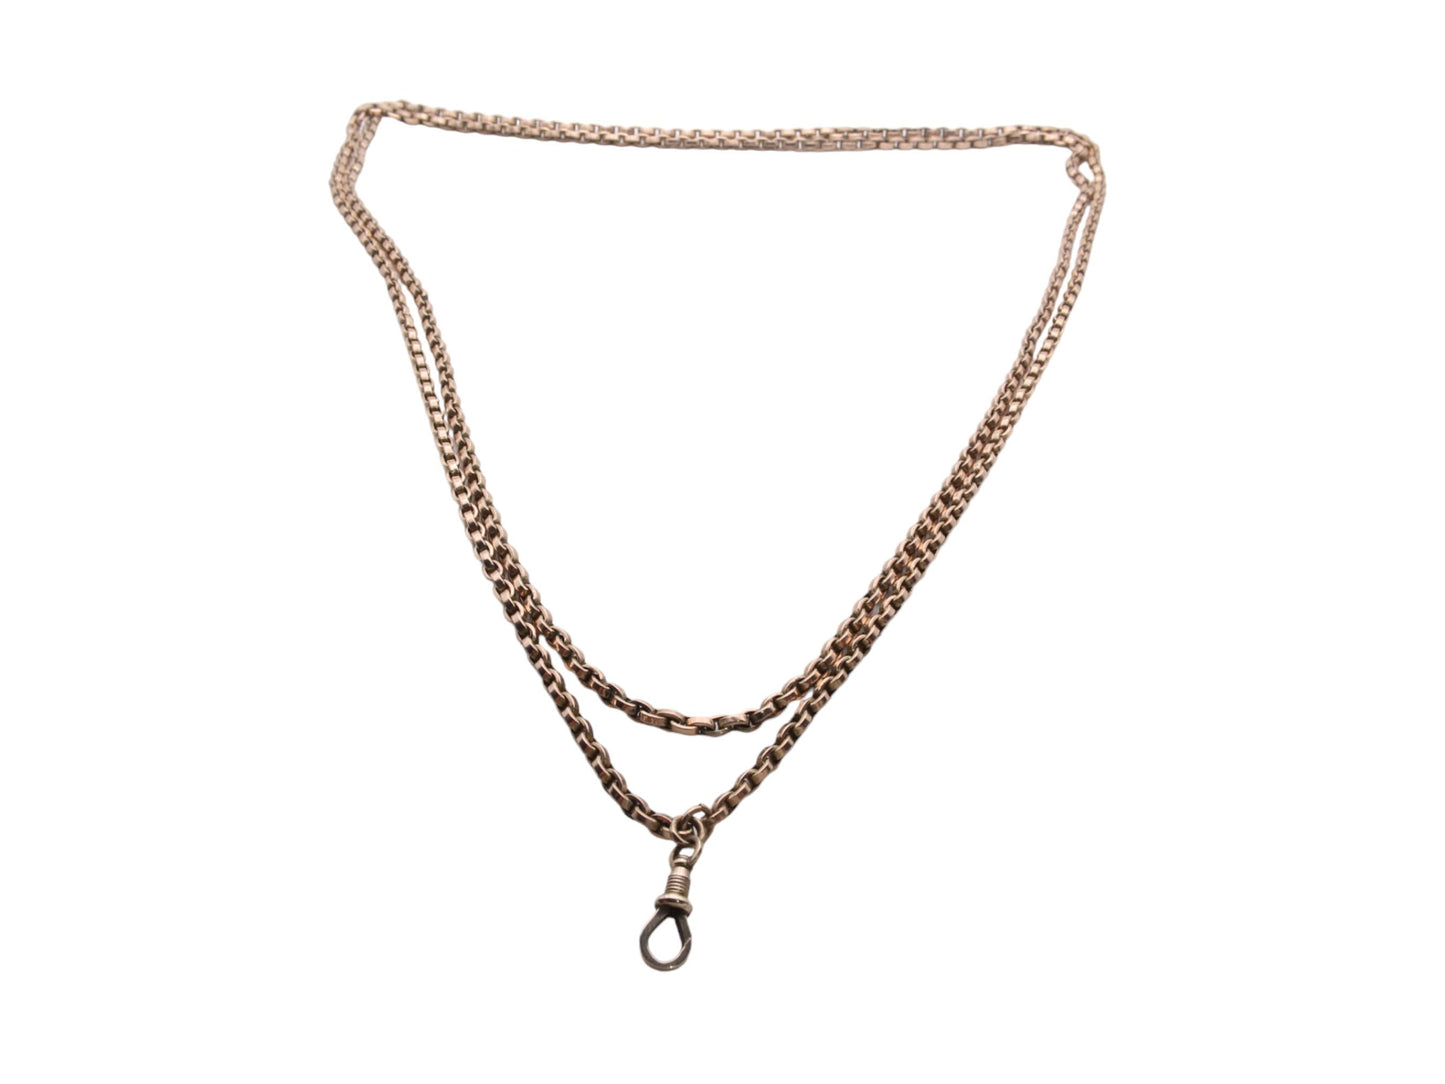 Antique 10ct Rose Gold Long Guard Belcher Necklace 61" 48g